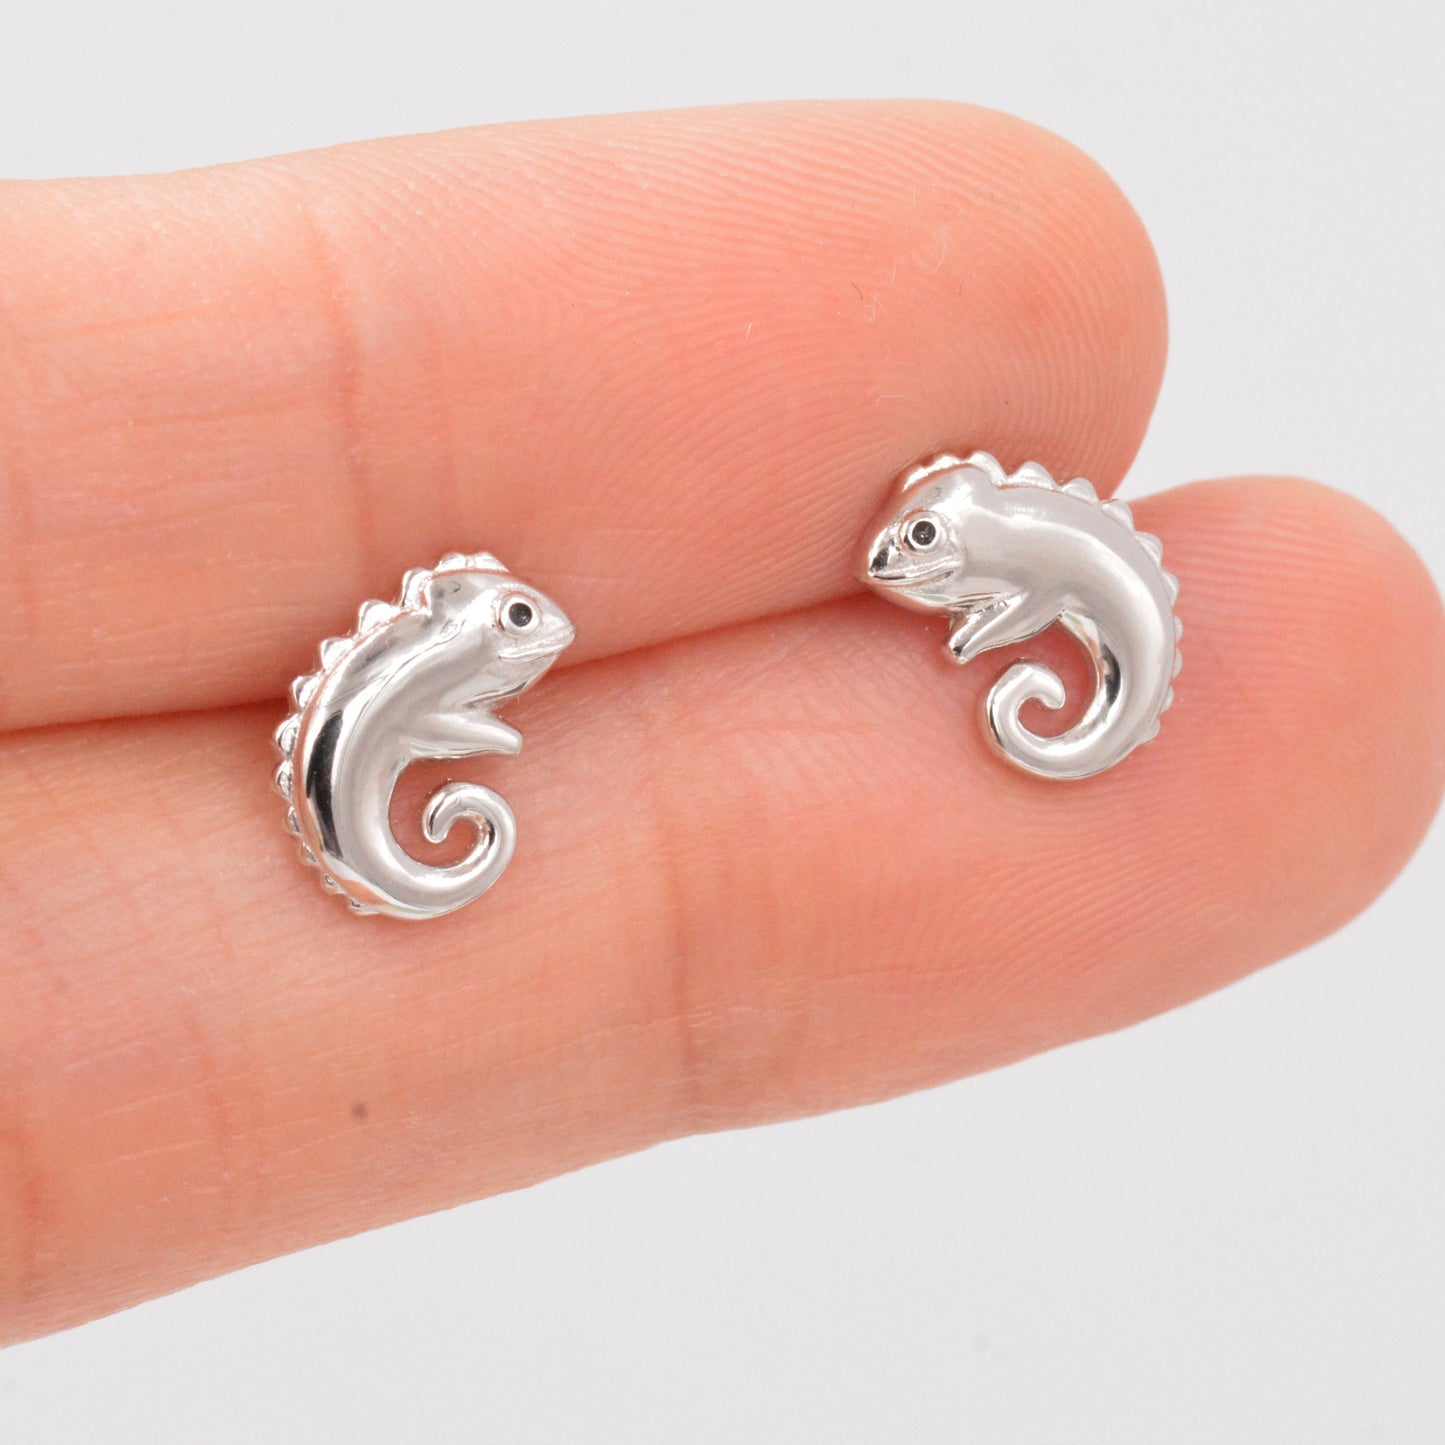 Chameleon Stud Earrings in Sterling Silver, Lizard Stud, Cute Animal Earrings, Nature Inspired Earrings